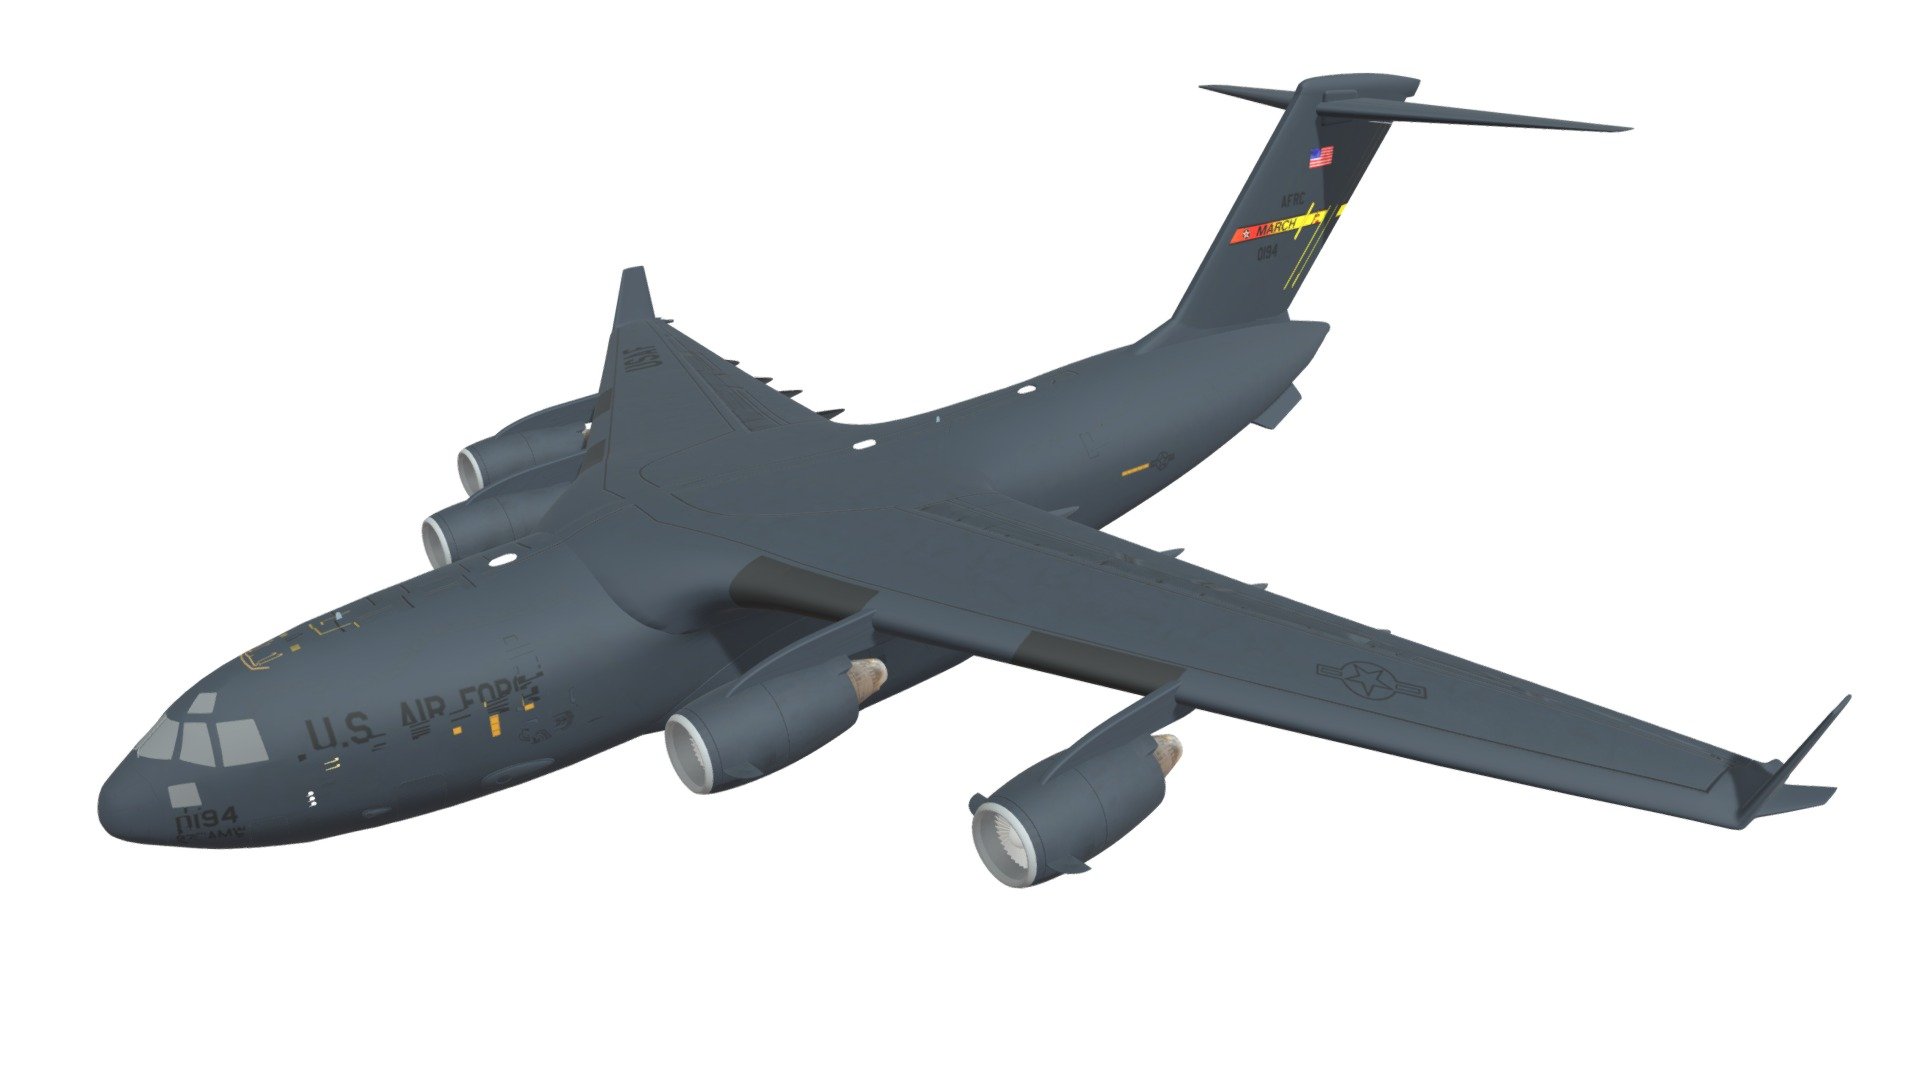 High detailed 3d model of C17 Globemaster III military transport aircraft 3d model